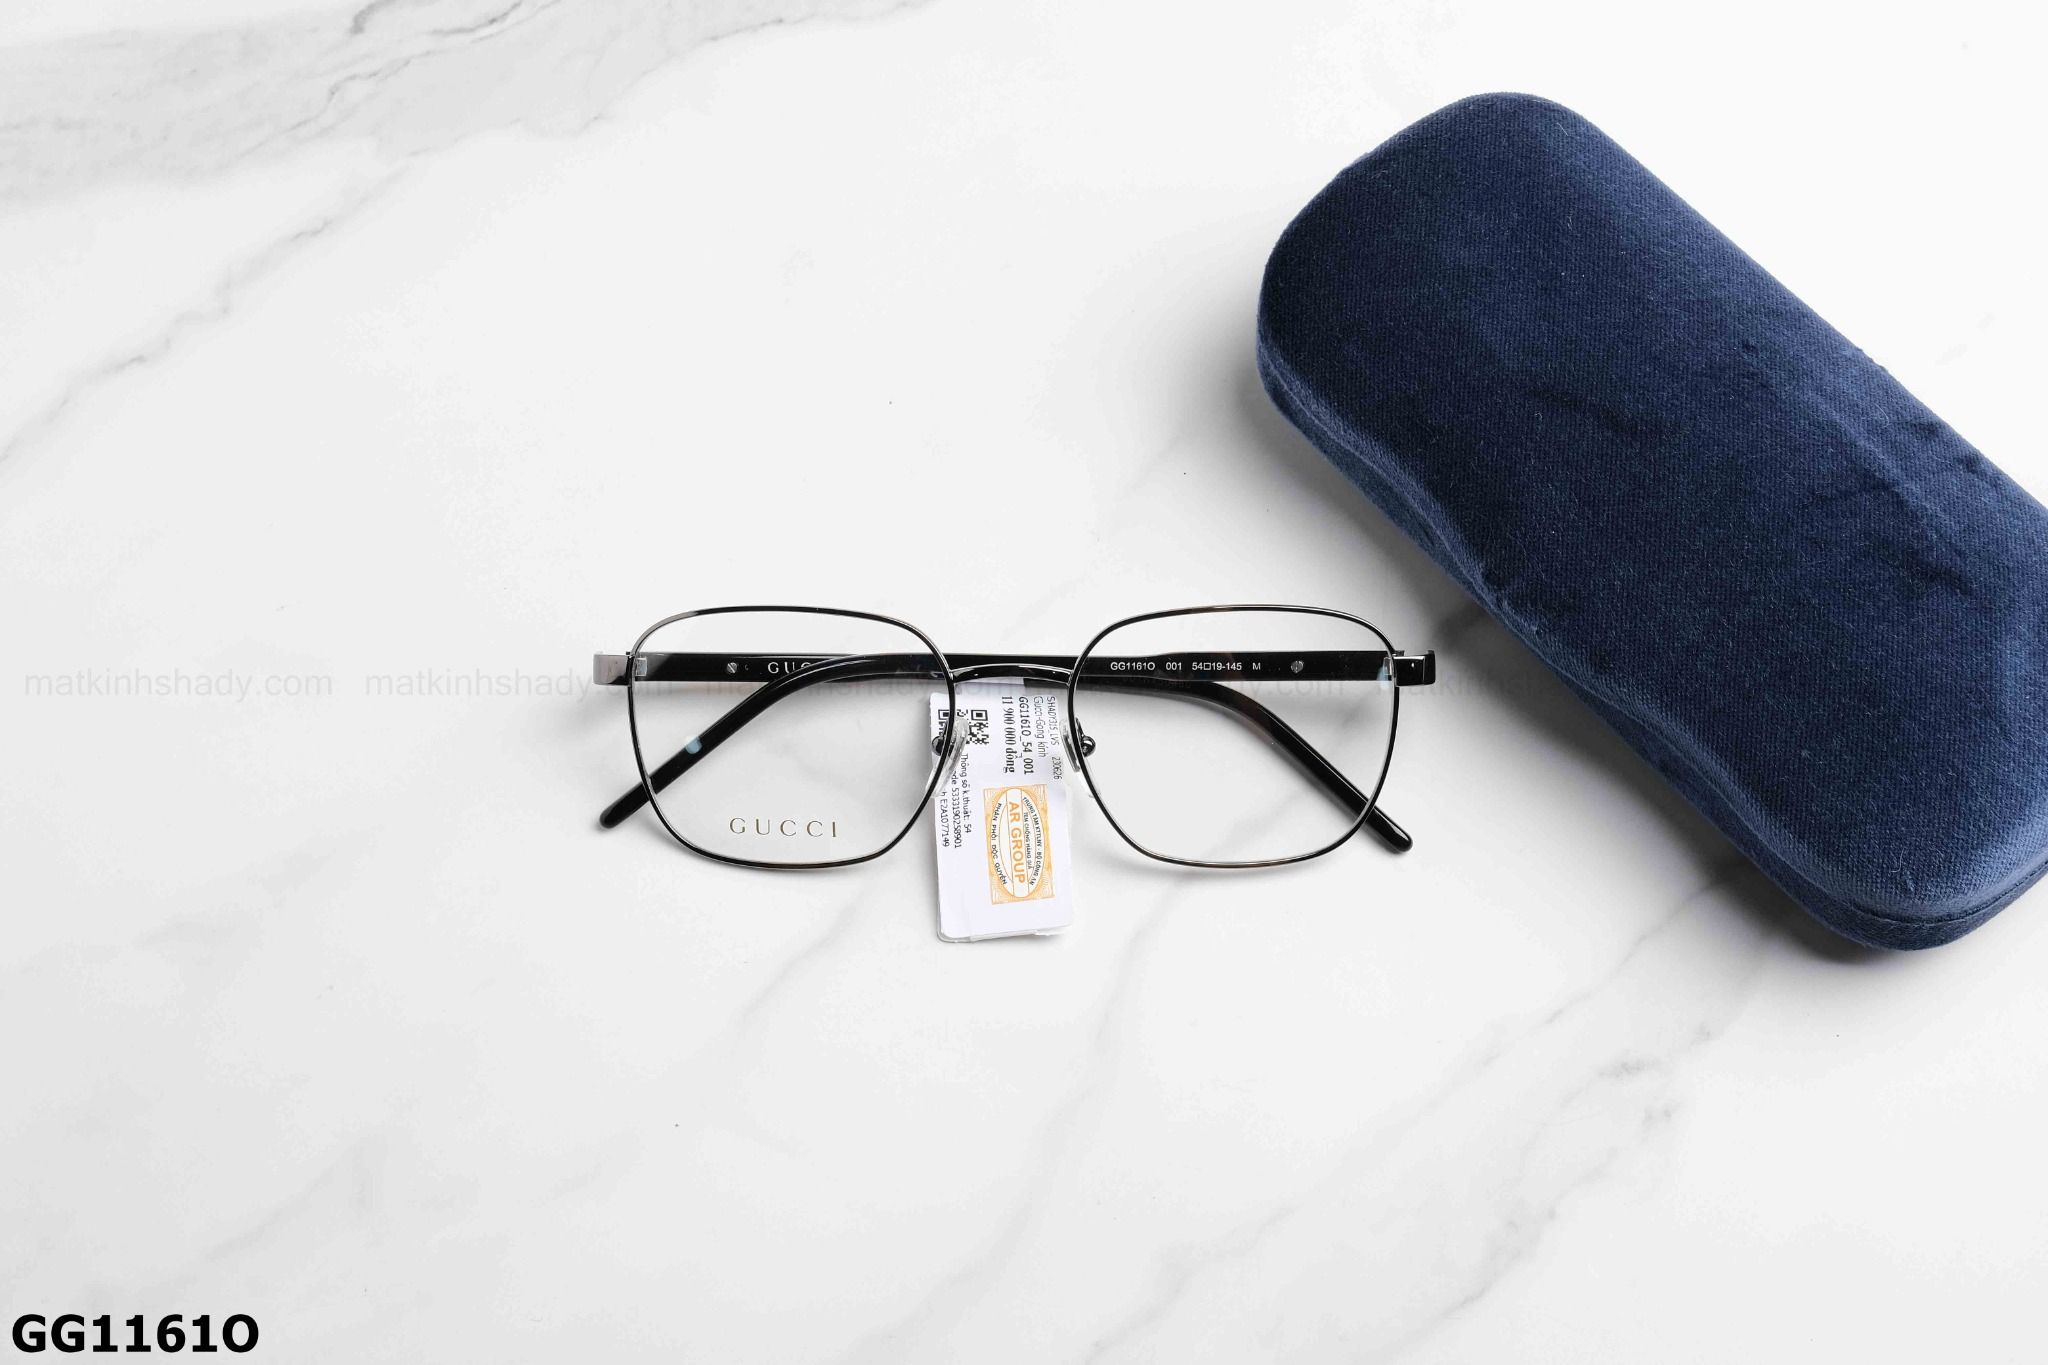  Gucci Eyewear - Glasses - GG1161O 